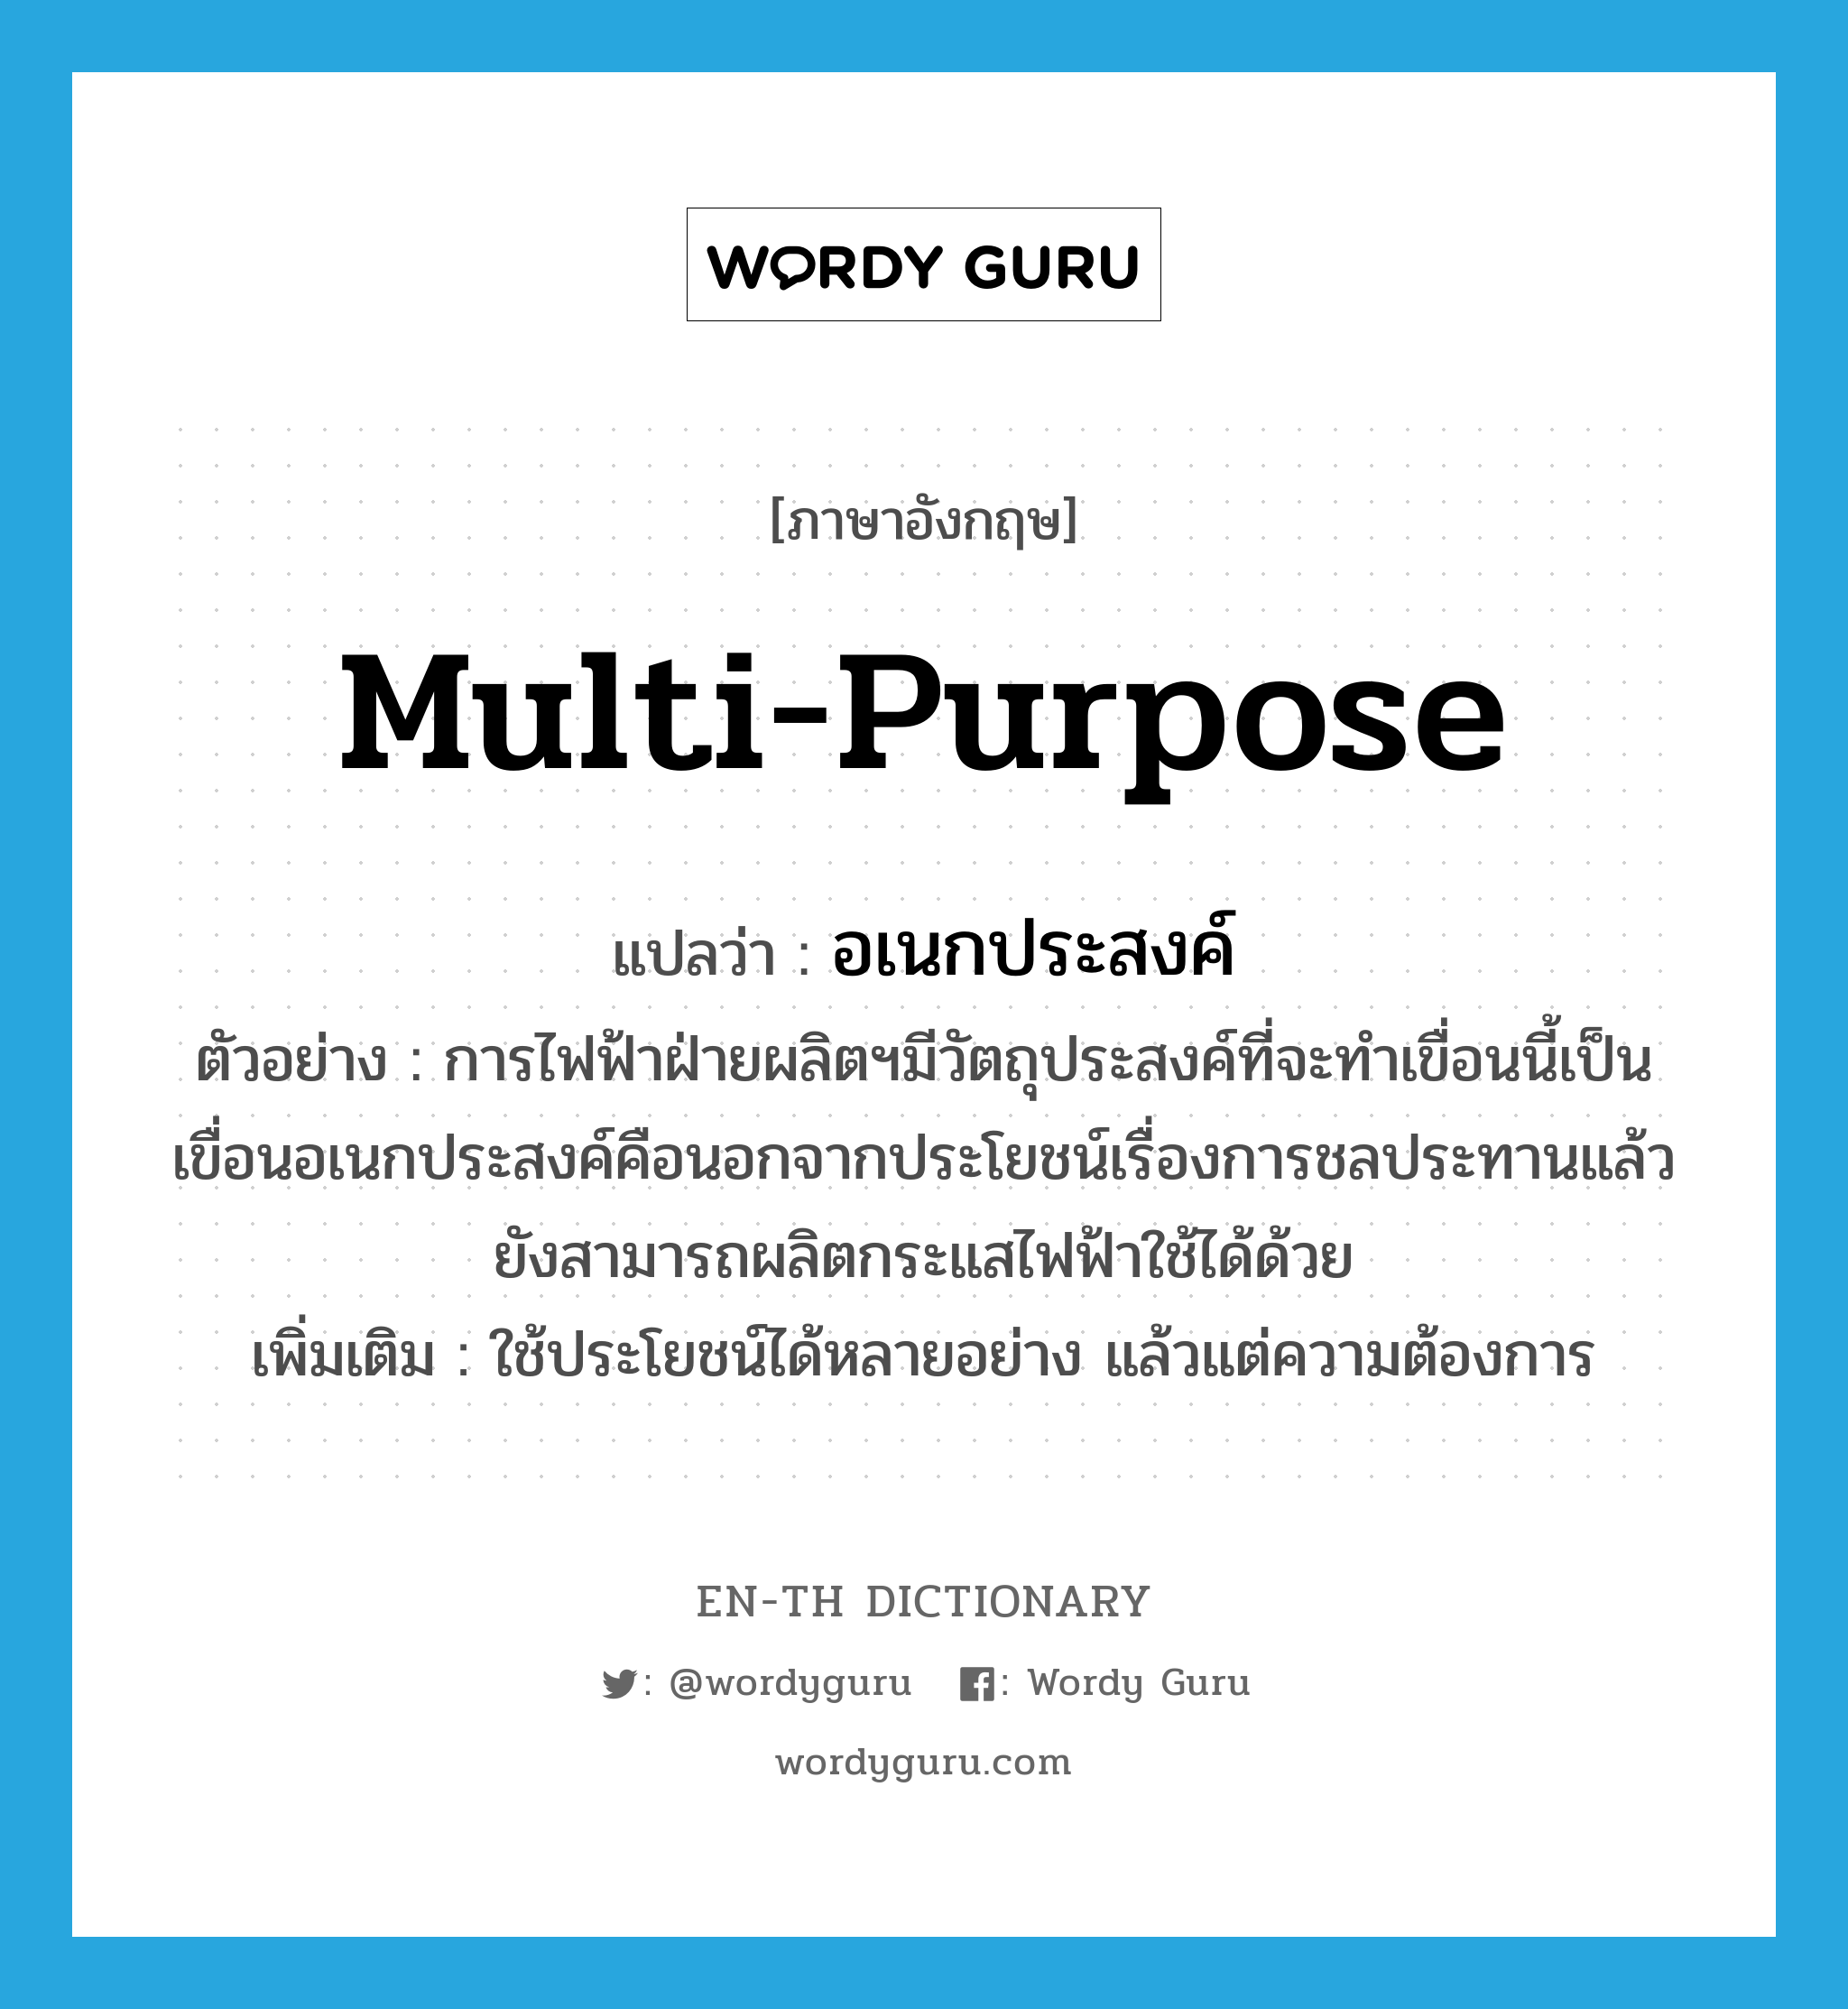 multi-purpose แปลว่า?, คำศัพท์ภาษาอังกฤษ multi-purpose แปลว่า อเนกประสงค์ ประเภท ADJ ตัวอย่าง การไฟฟ้าฝ่ายผลิตฯมีวัตถุประสงค์ที่จะทำเขื่อนนี้เป็นเขื่อนอเนกประสงค์คือนอกจากประโยชน์เรื่องการชลประทานแล้วยังสามารถผลิตกระแสไฟฟ้าใช้ได้ด้วย เพิ่มเติม ใช้ประโยชน์ได้หลายอย่าง แล้วแต่ความต้องการ หมวด ADJ